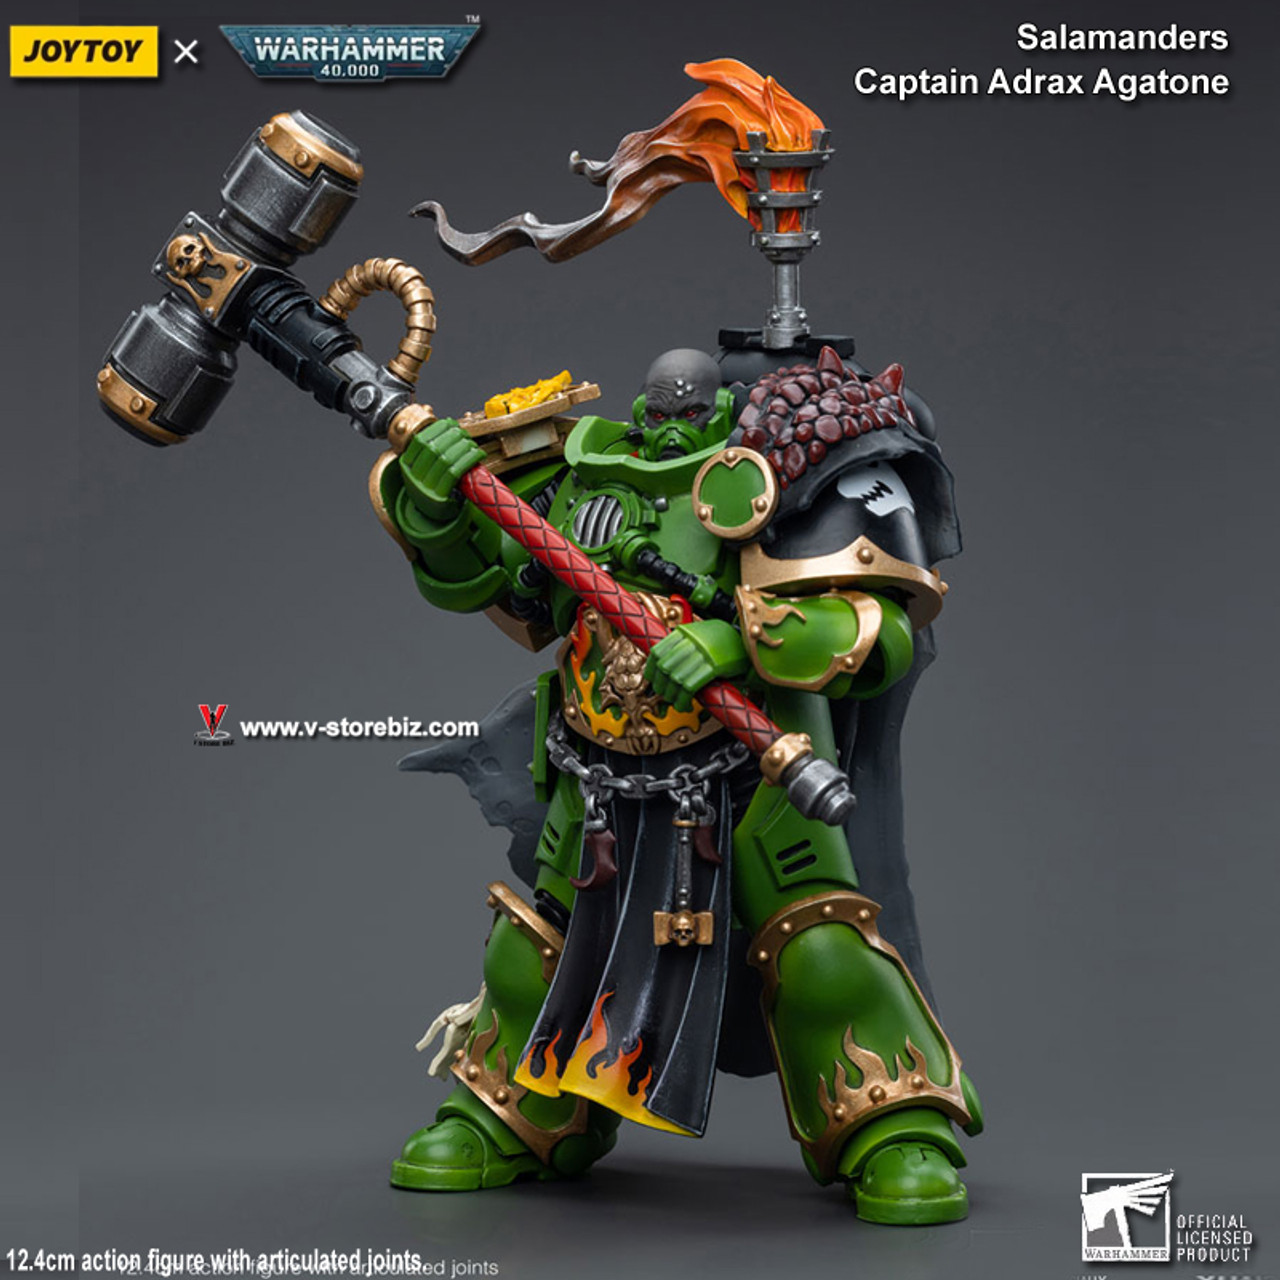 JOYTOY Warhammer 40K Salamanders: Captain Adrax Agatone - V Store  Collectibles